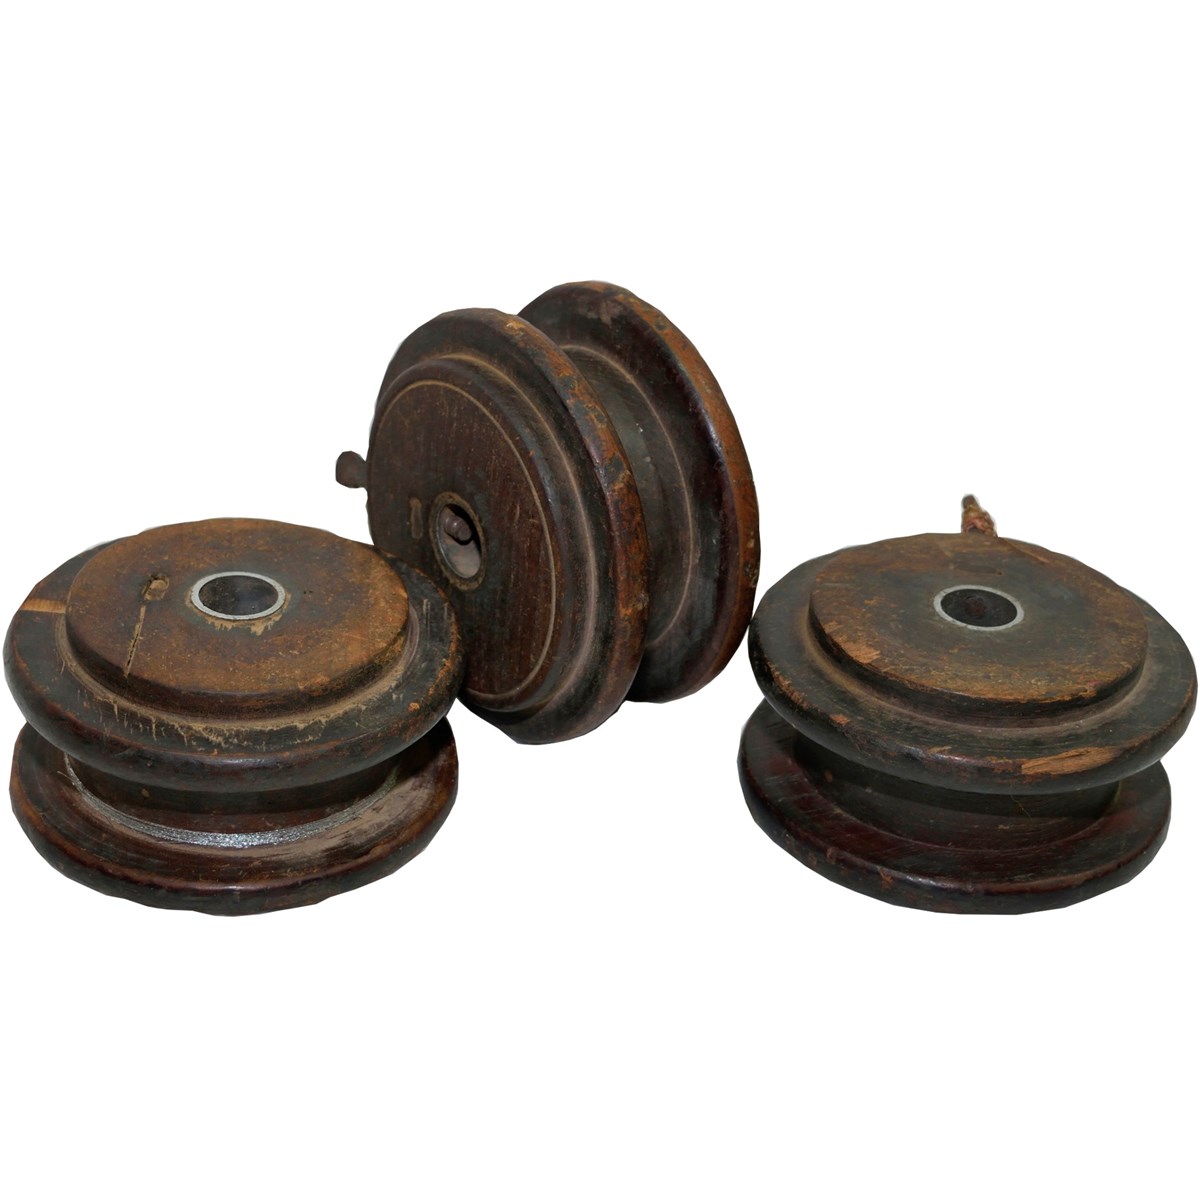 Flat Wooden Spool - 4.25" Diameter x 2" - Wood, Metal